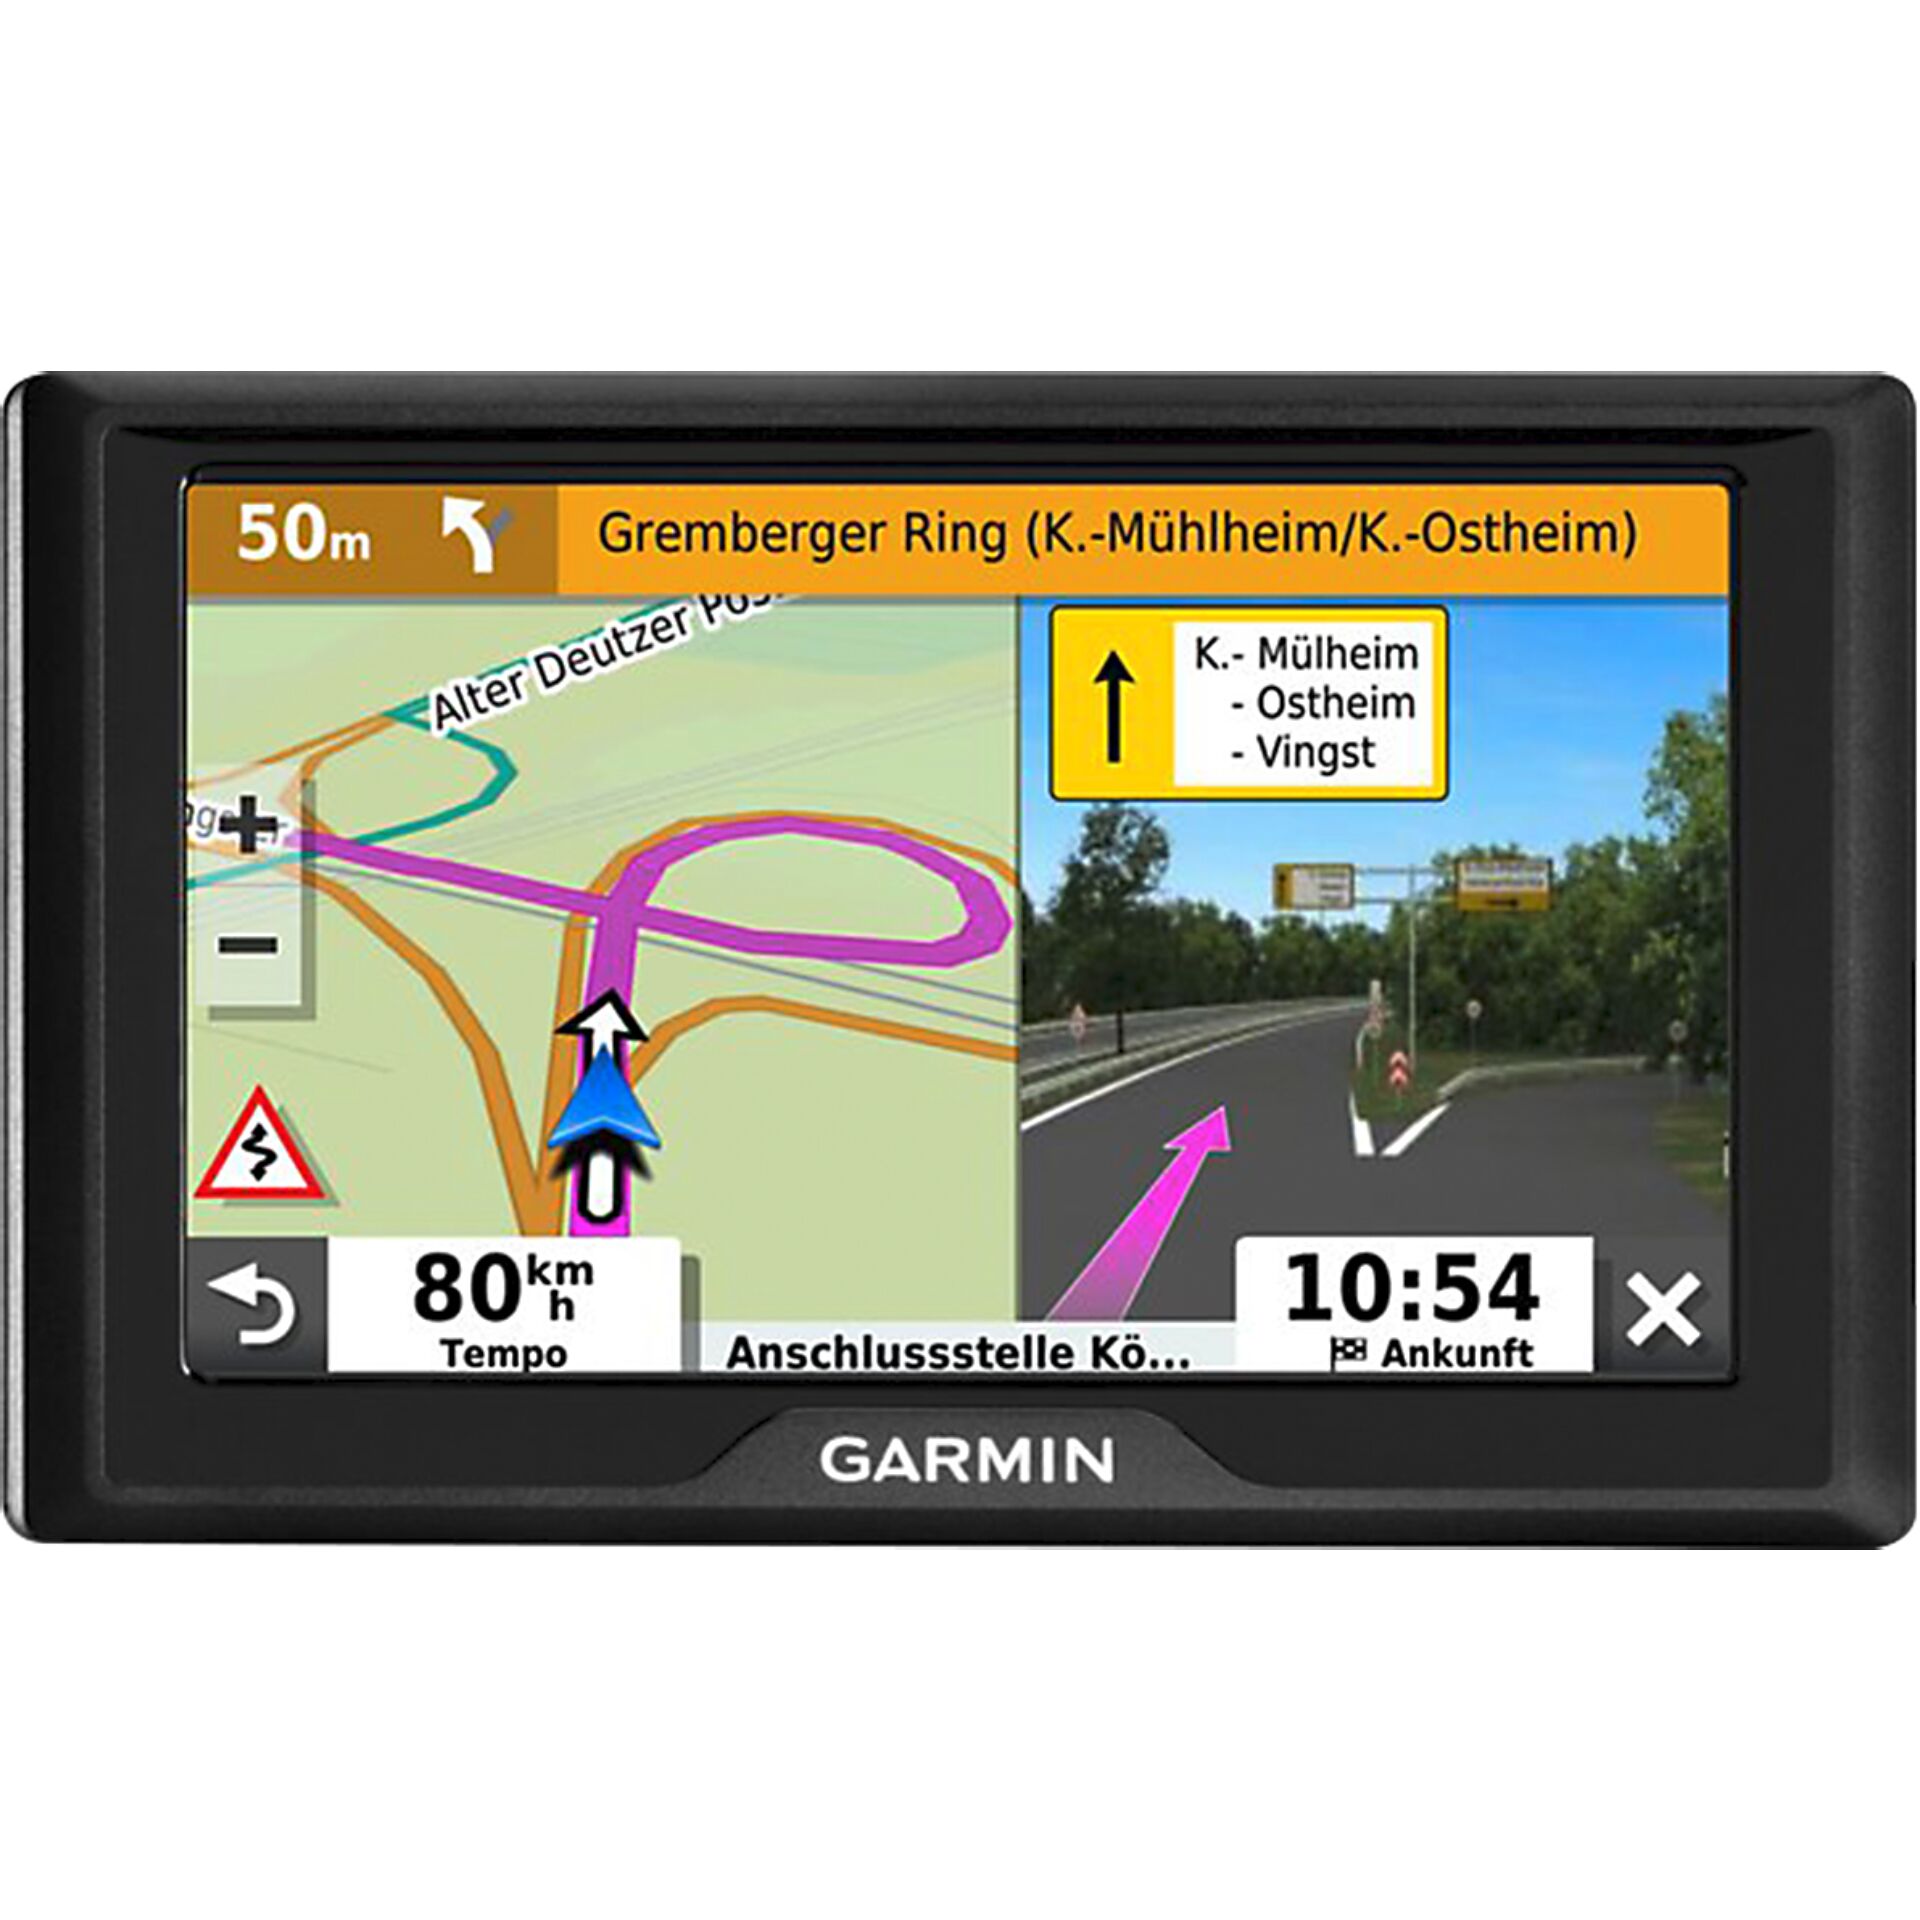 Garmin Drive 52 Live Traffic Navigationssystem günstig bei